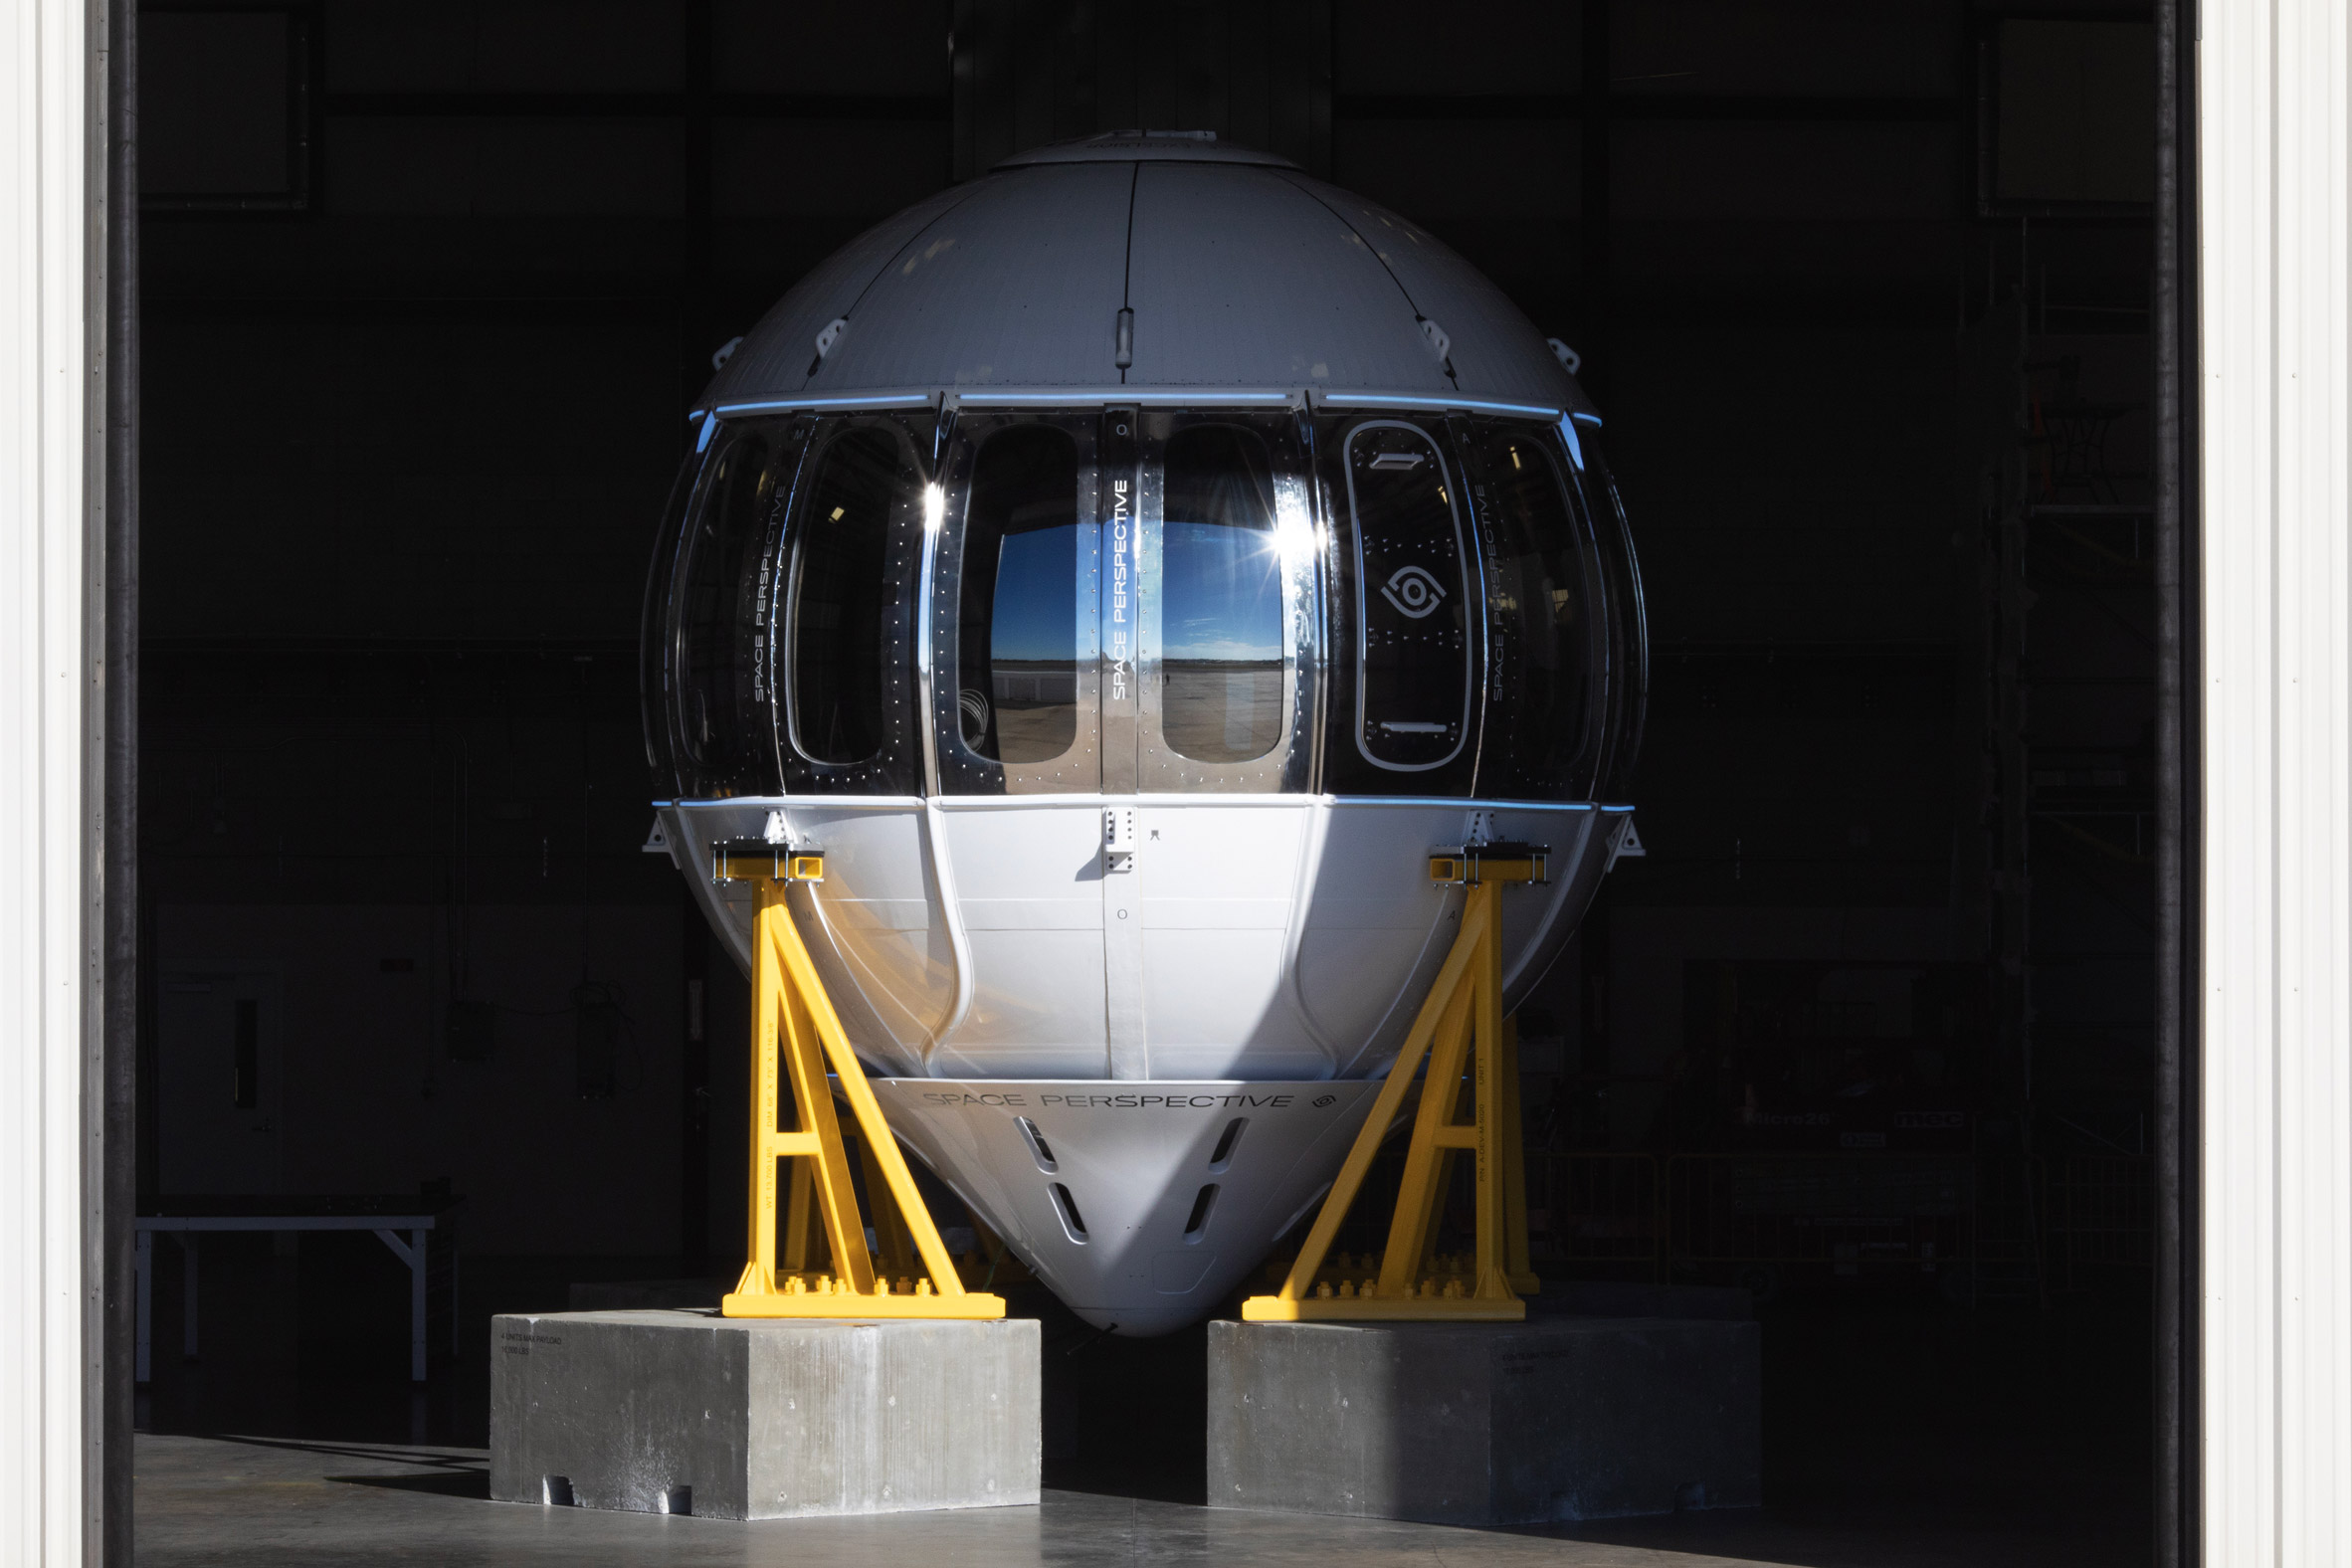 Excelsior test capsule in a hangar